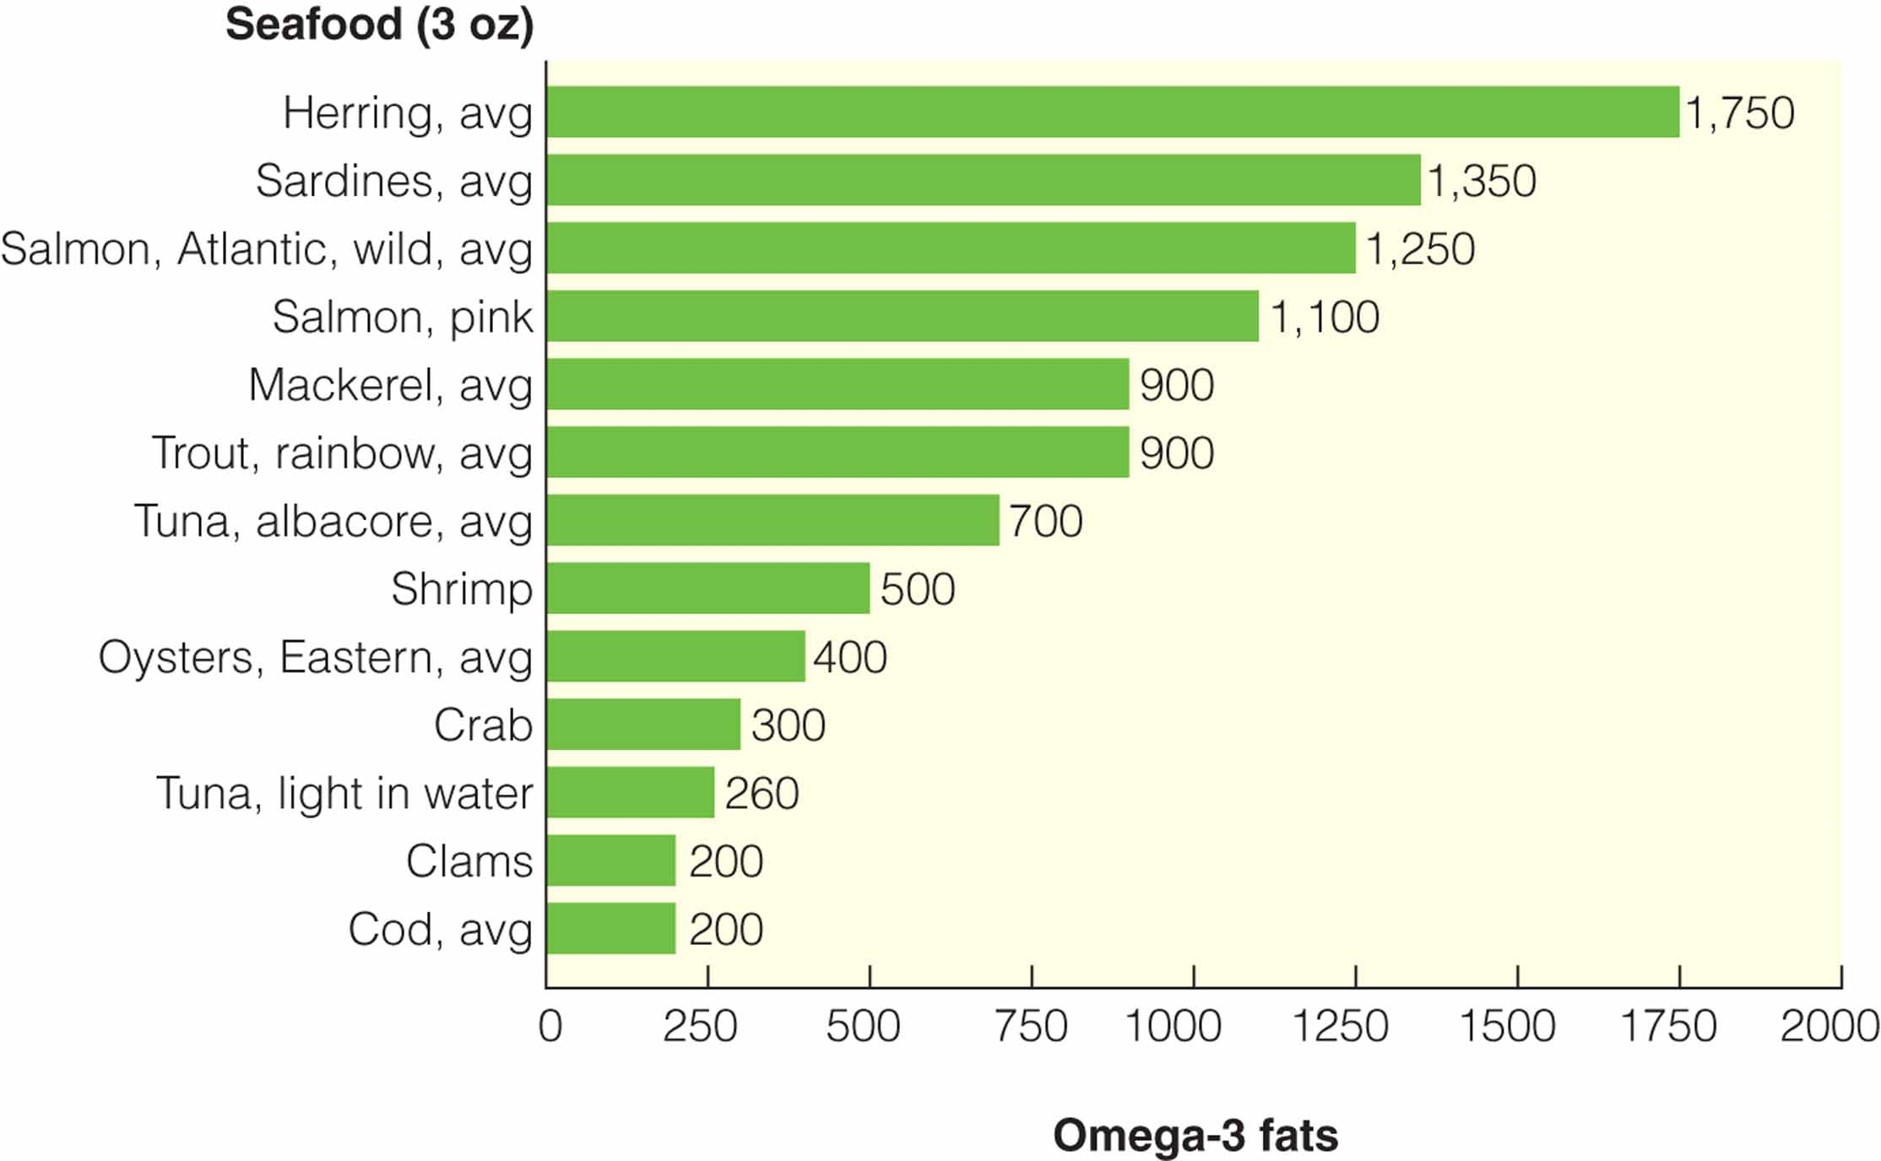 Omega-3 Fatty Acids in Fish